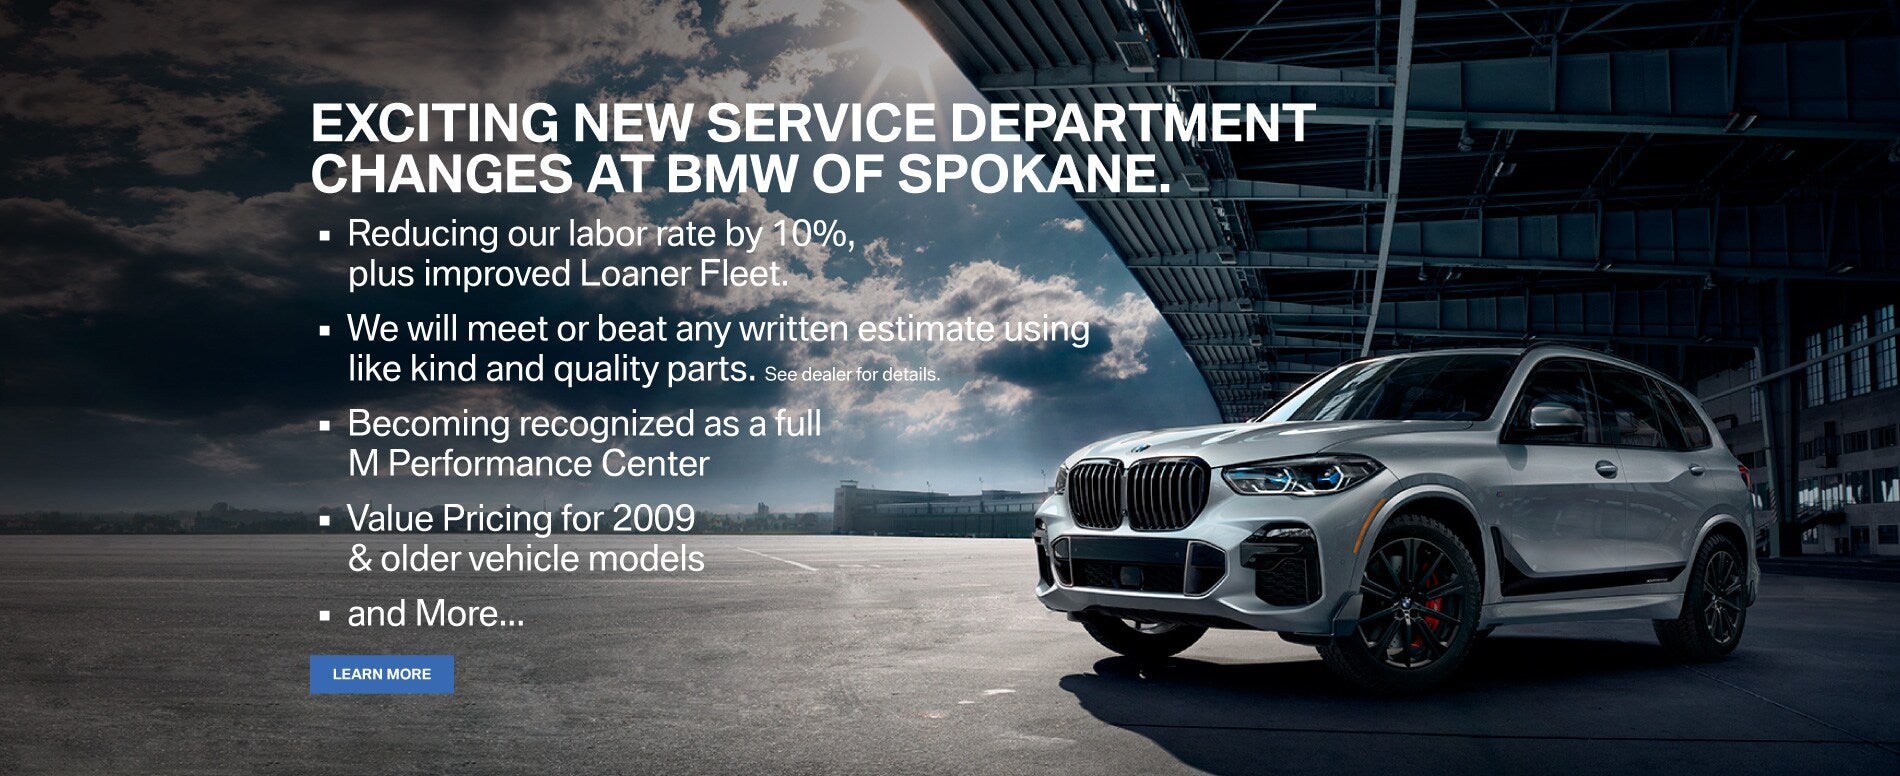 New Service Department at BMW of Spokane in Spokane, WA